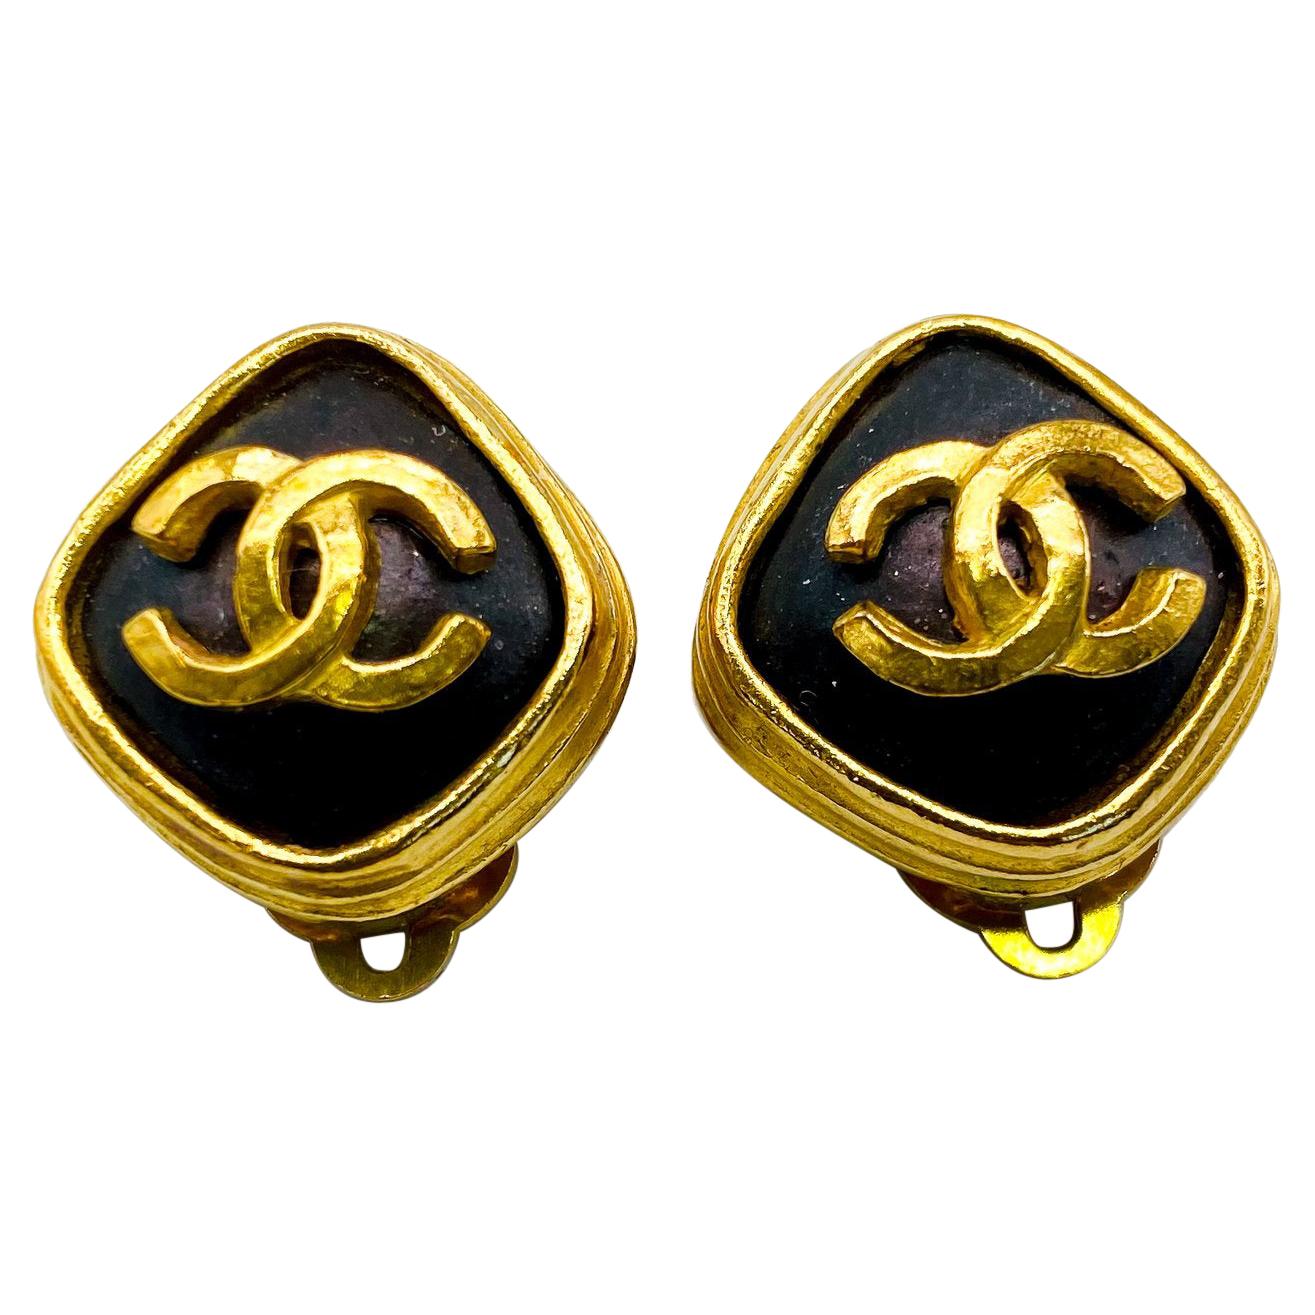 Chanel Diamond Shaped Earrings Vintage, 1990s